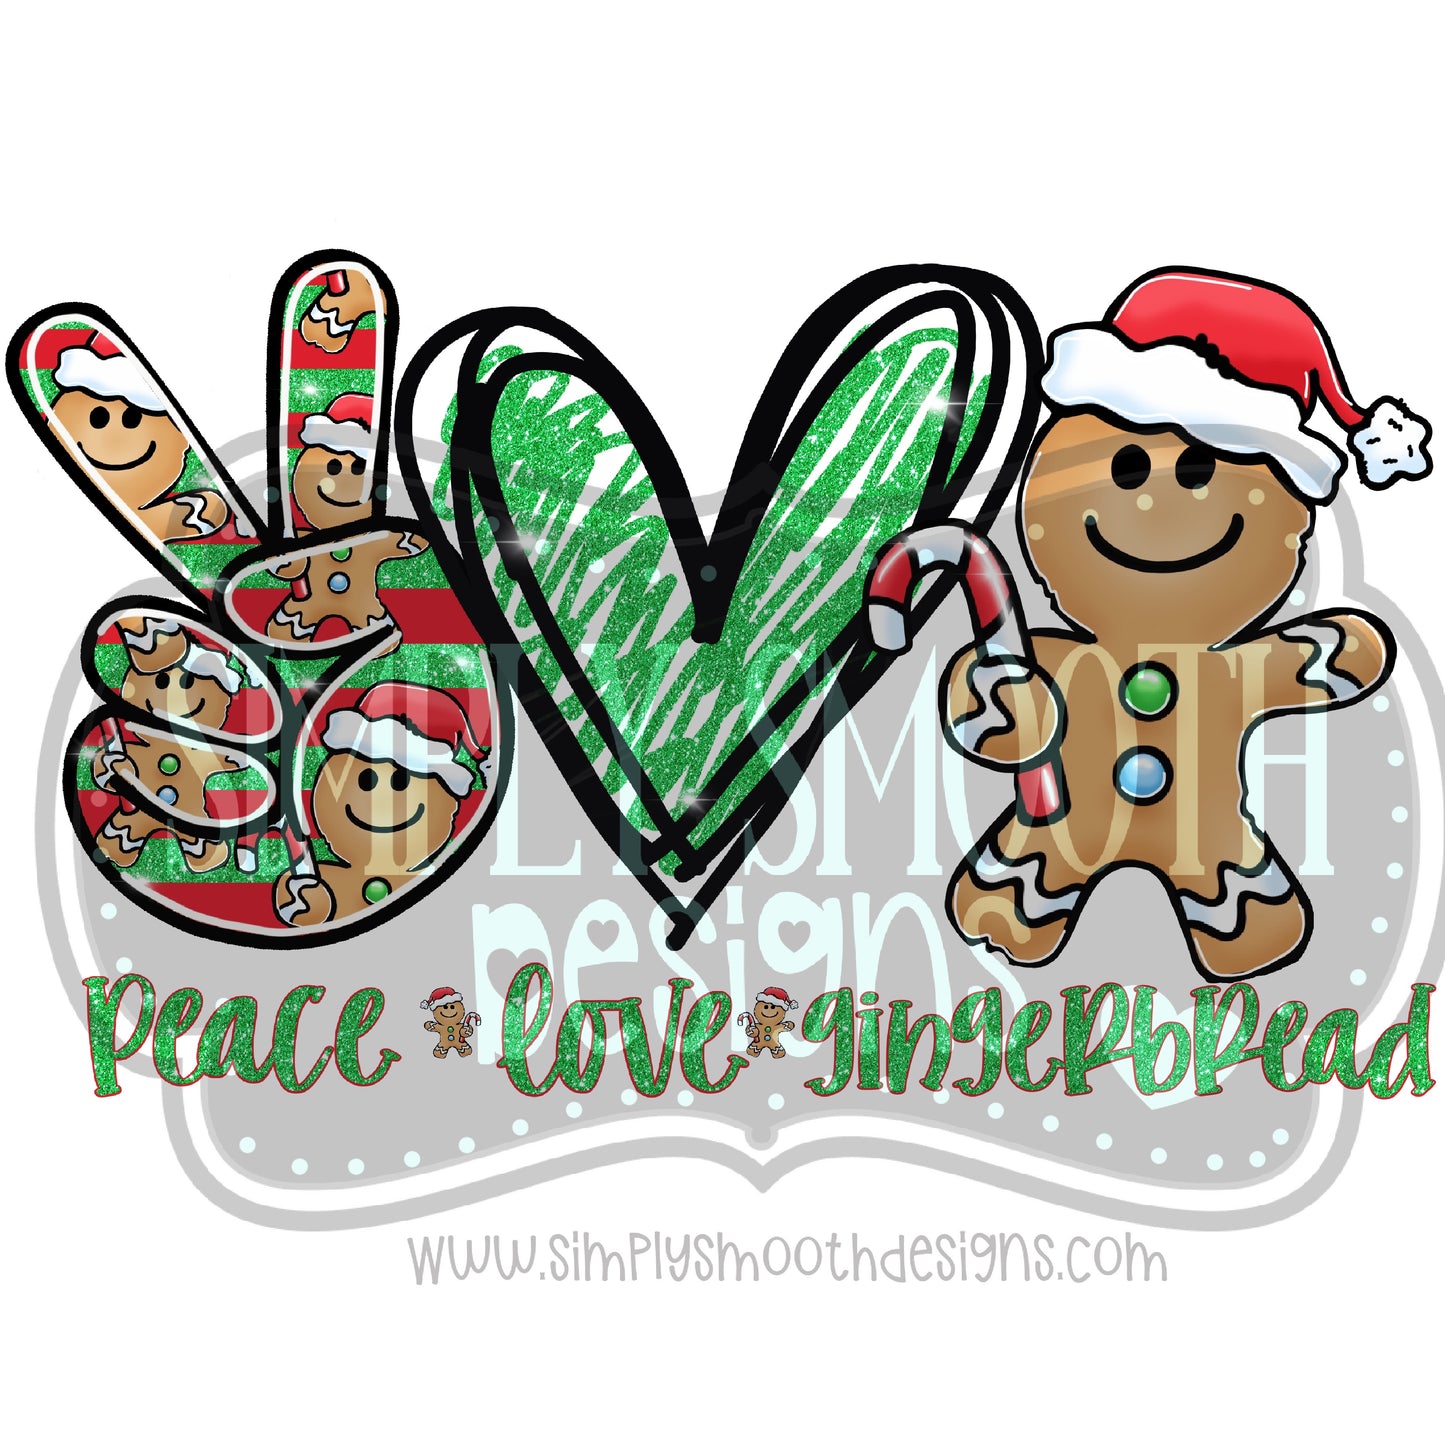 Peace love gingerbread